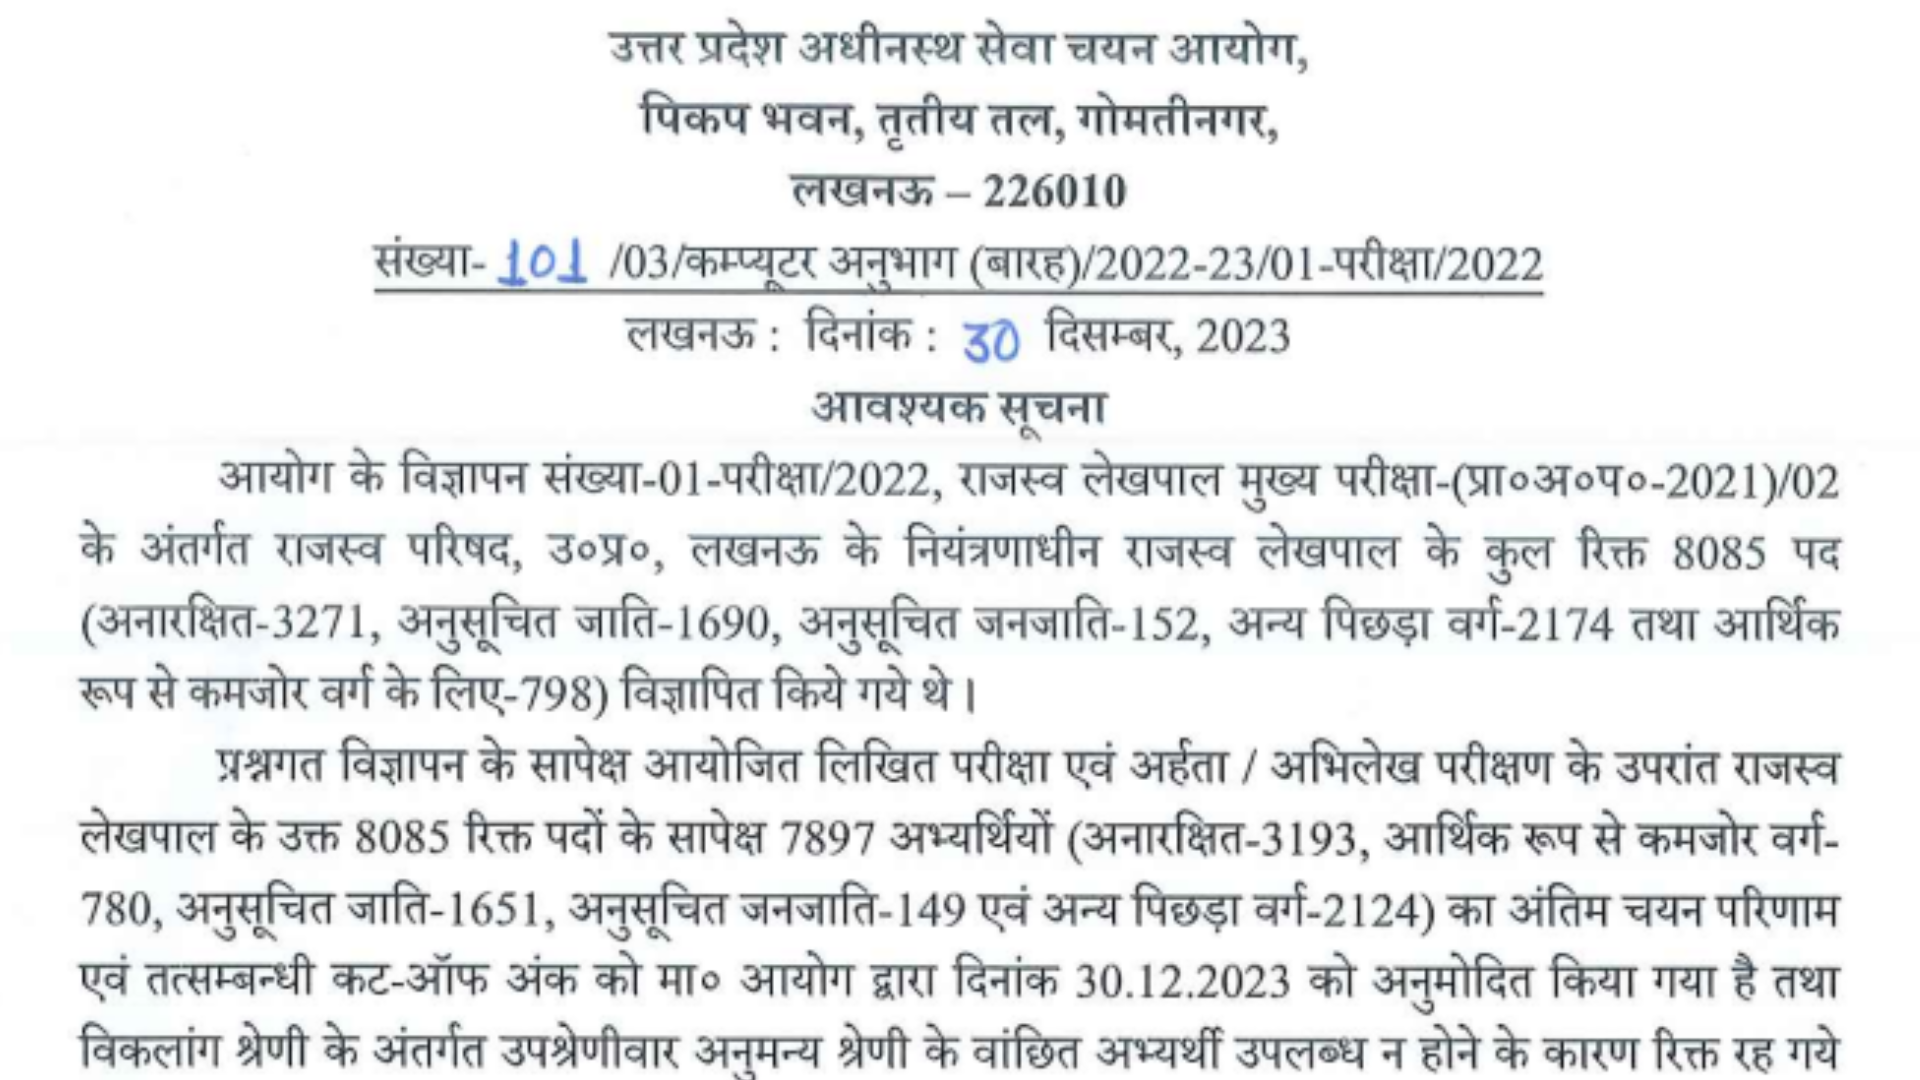 UPSSSC UP Rajasva Lekhpal Recruitment 2022 Final Result 2023